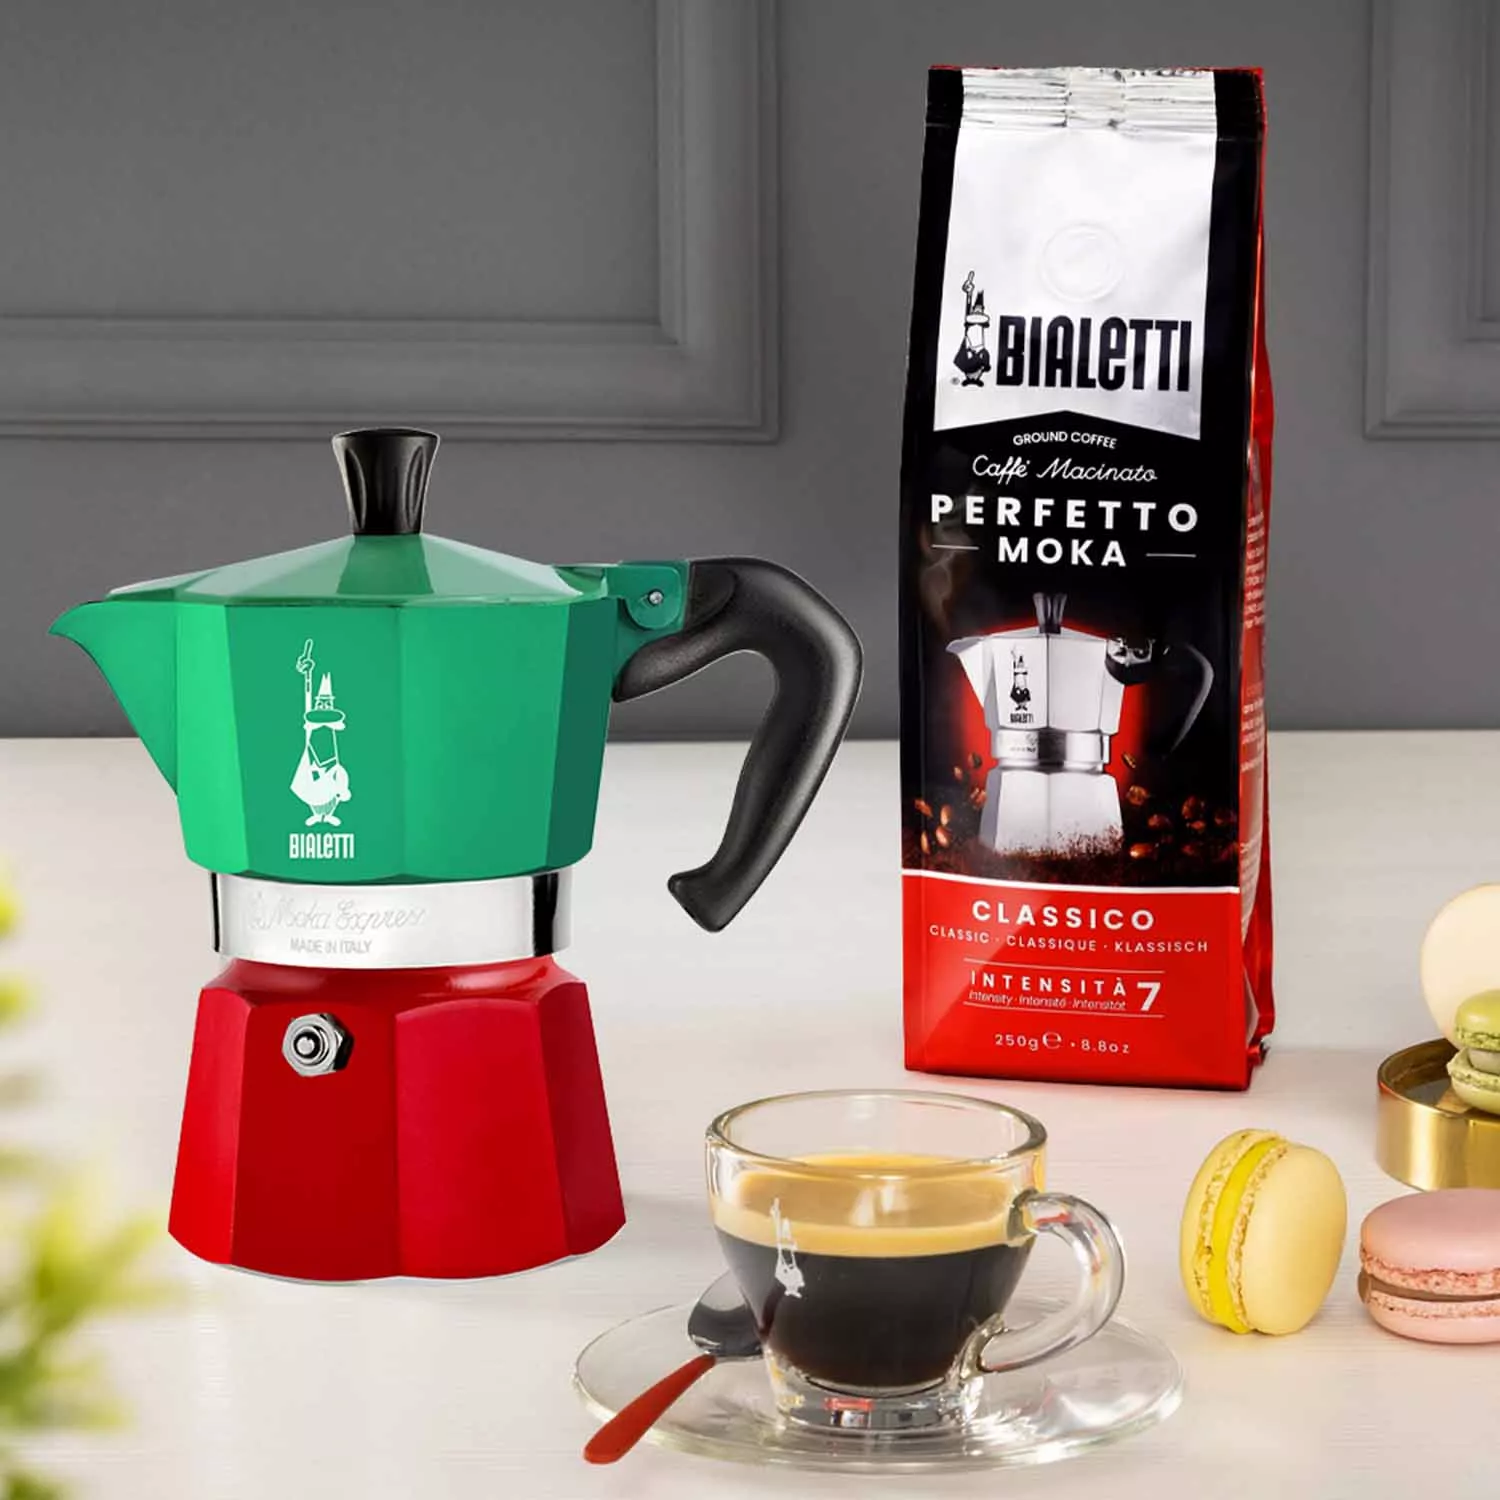 The Bialetti Moka Express Espresso Maker Review: The Classic